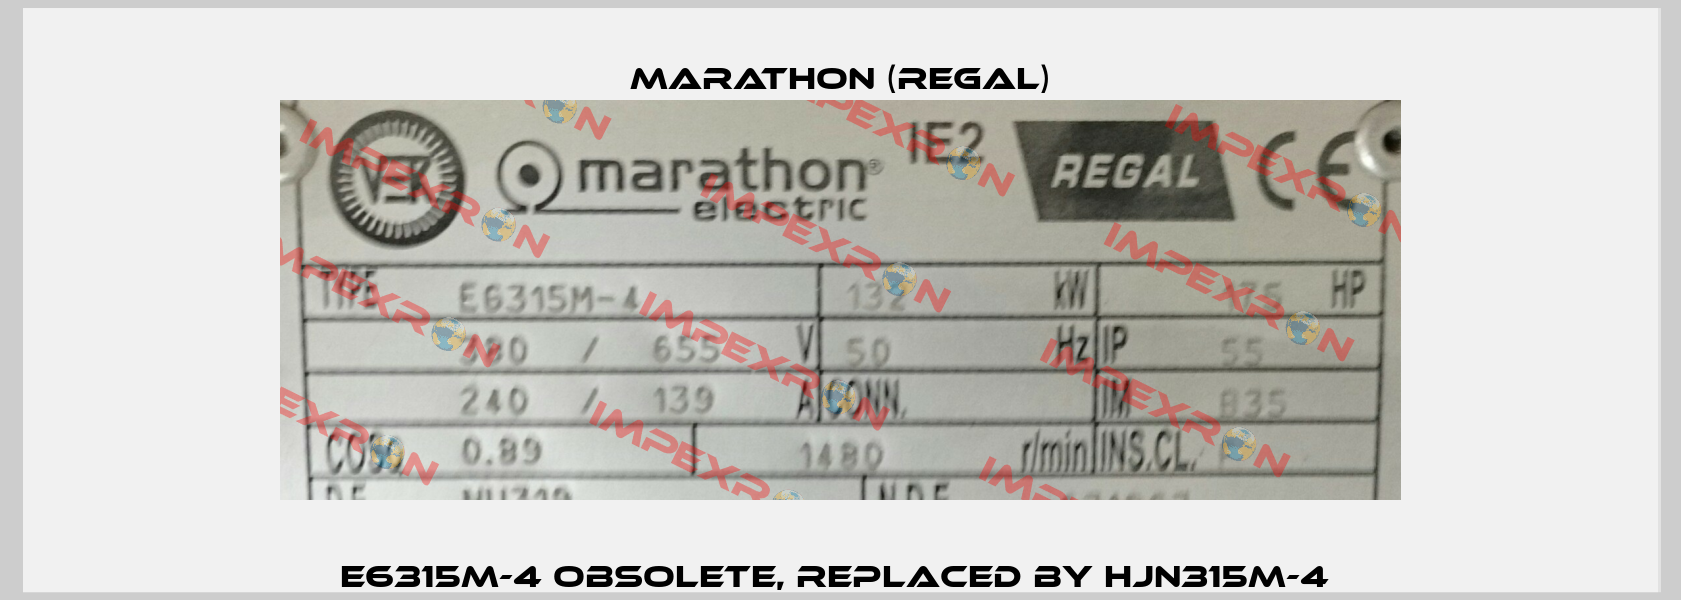 E6315M-4 obsolete, replaced by HJN315M-4  Marathon (Regal)